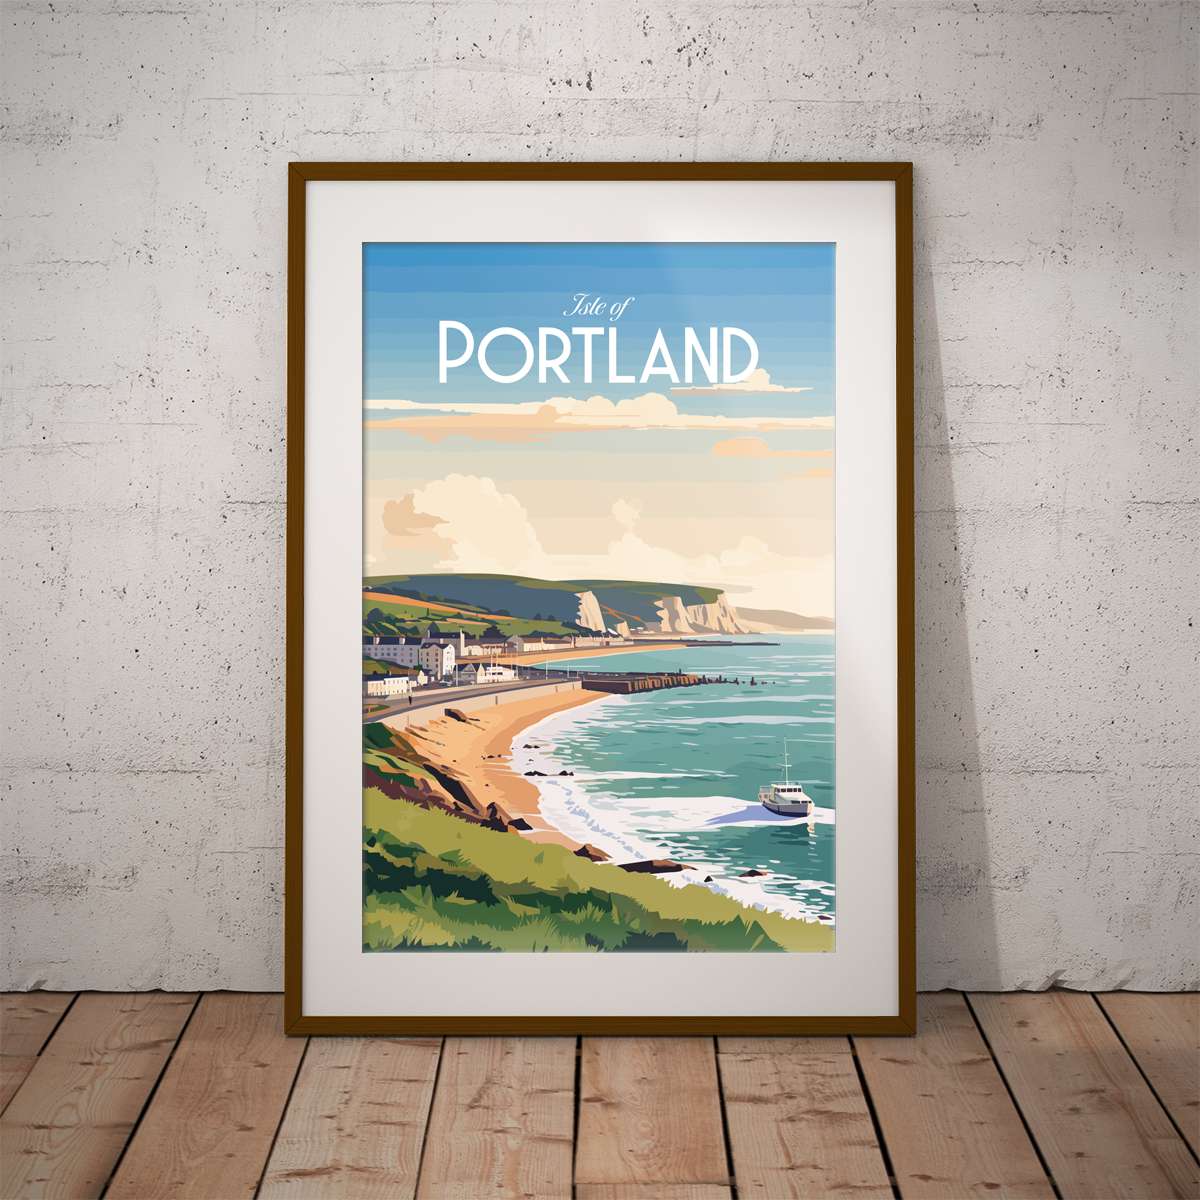 Isle of Portland poster by bon voyage design